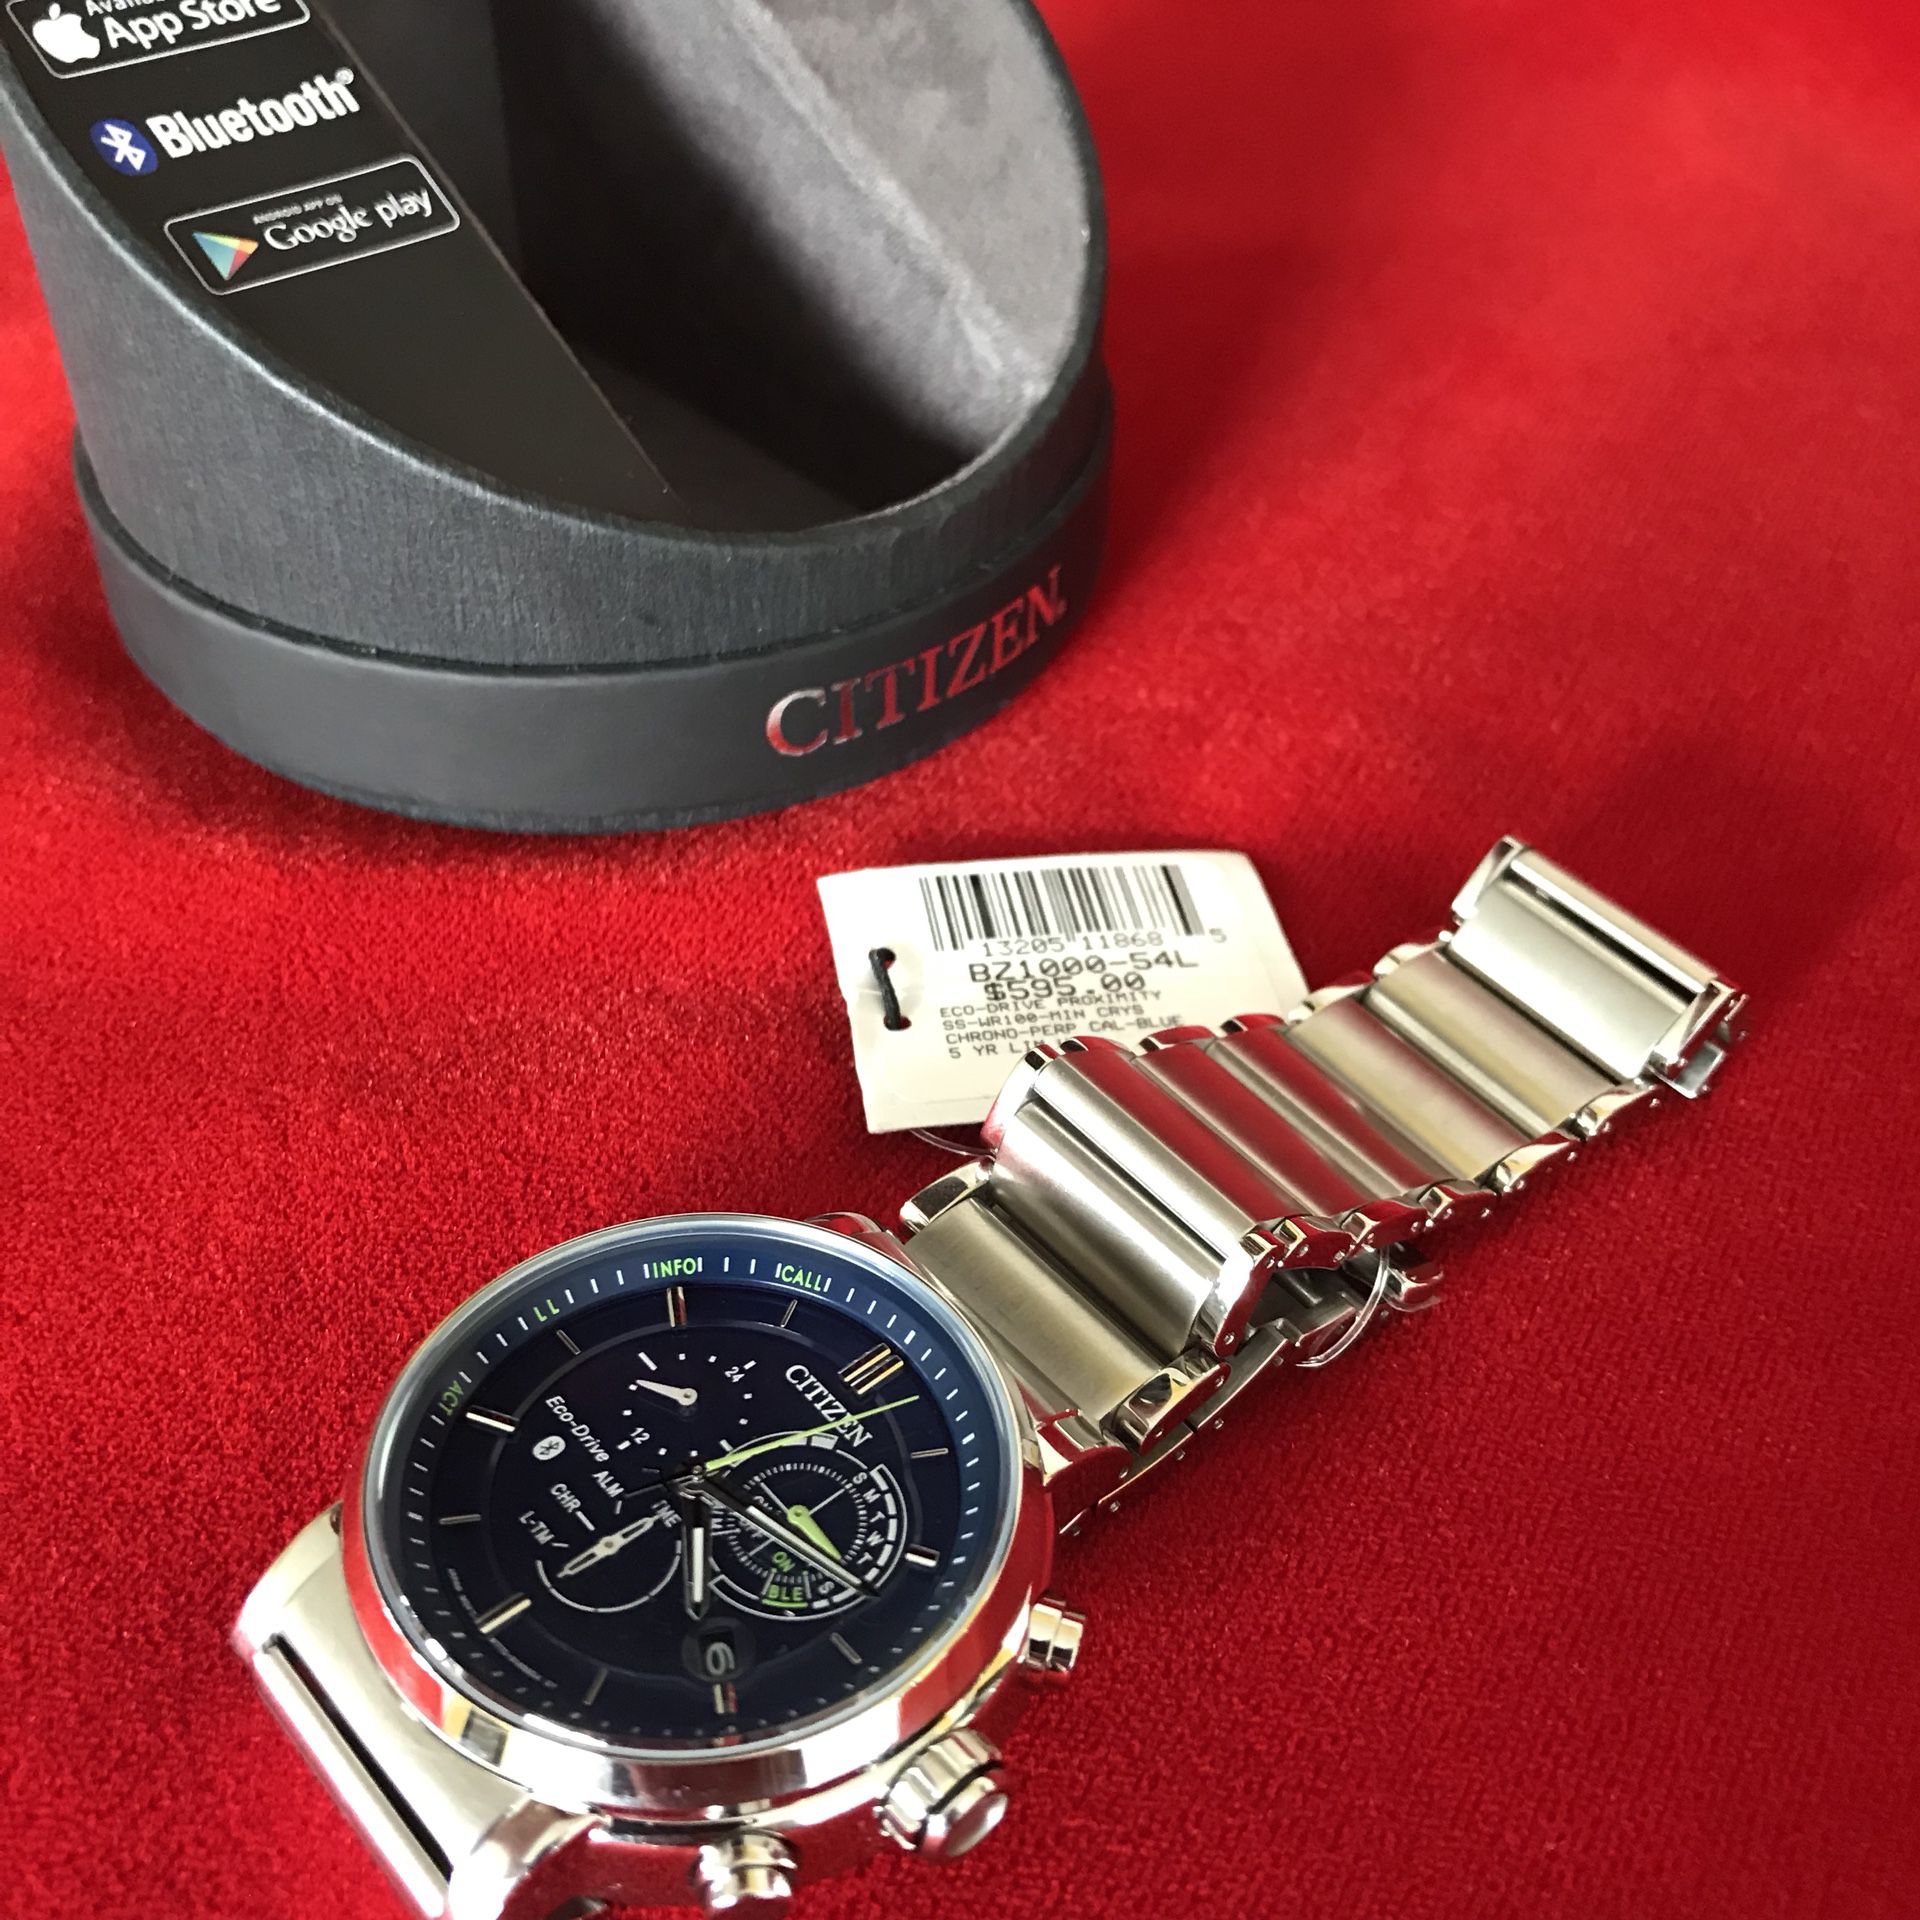 Citizen Eco-Drive Proximity Men's Hybrid Smart Watch - BRAND NEW